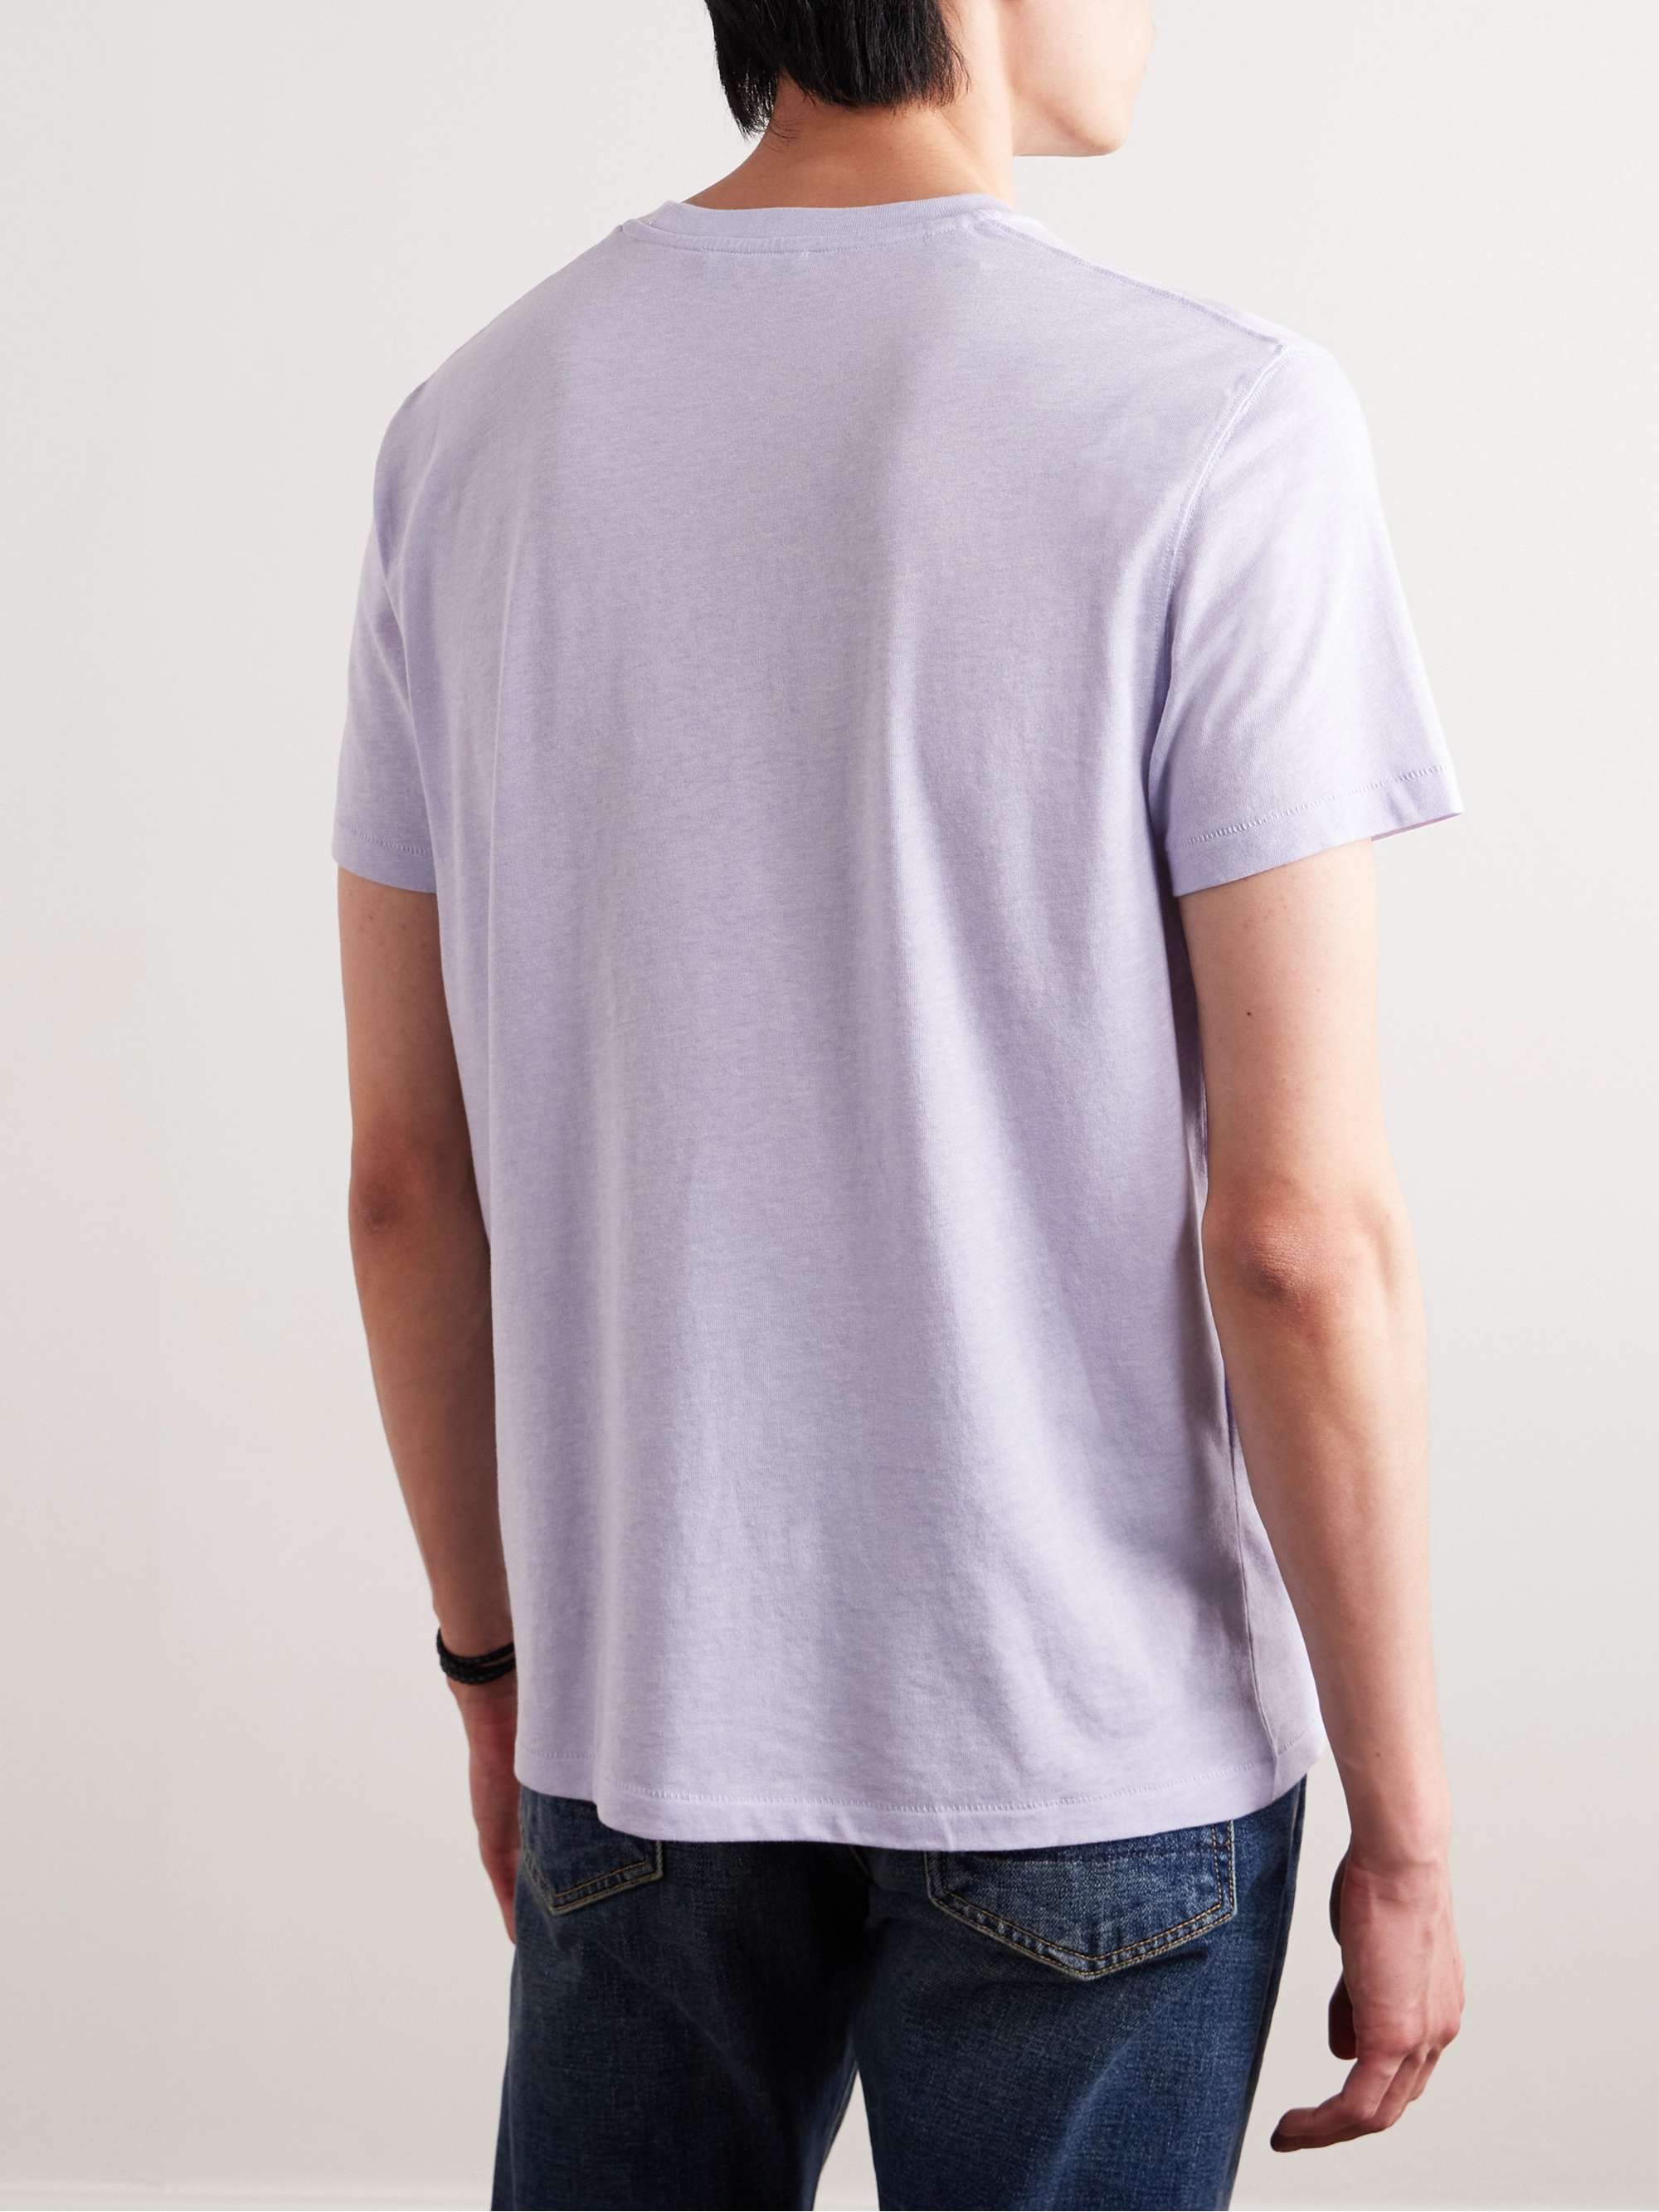 TOM FORD Logo-Embroidered Cotton-Blend Jersey T-Shirt for Men | MR PORTER